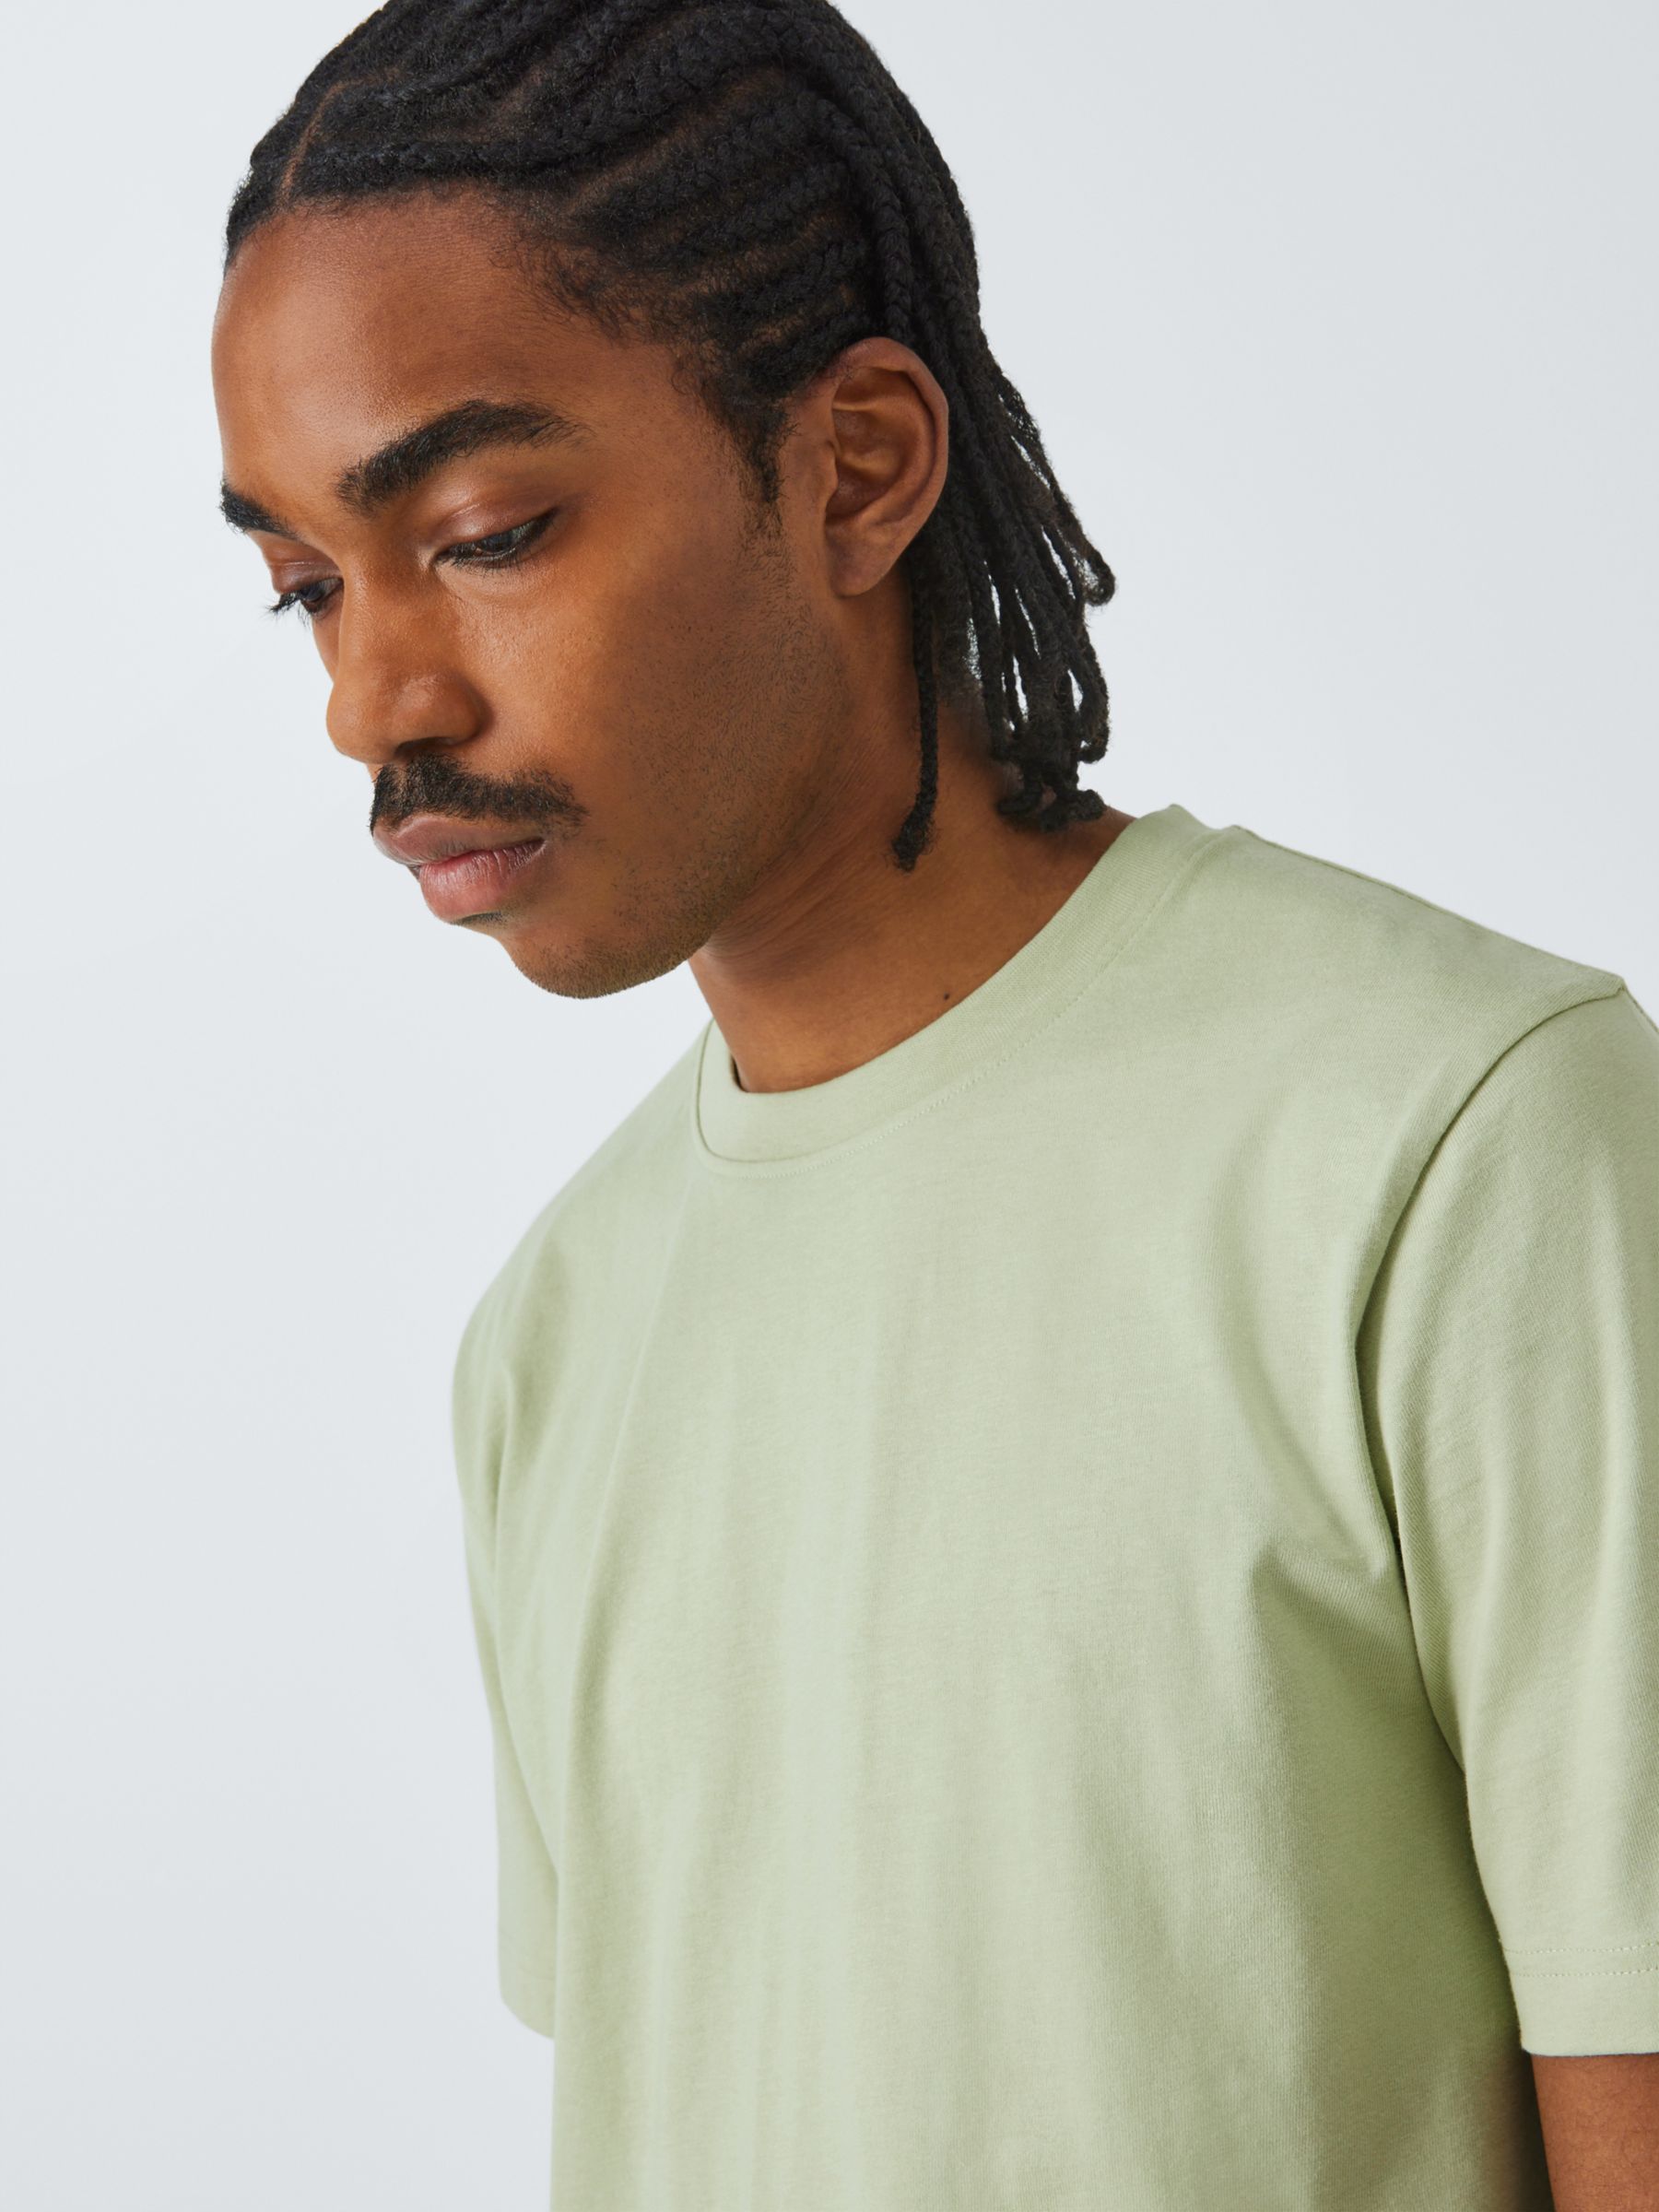 John Lewis ANYDAY Short Sleeve Plain T-Shirt, Celadon Green, S